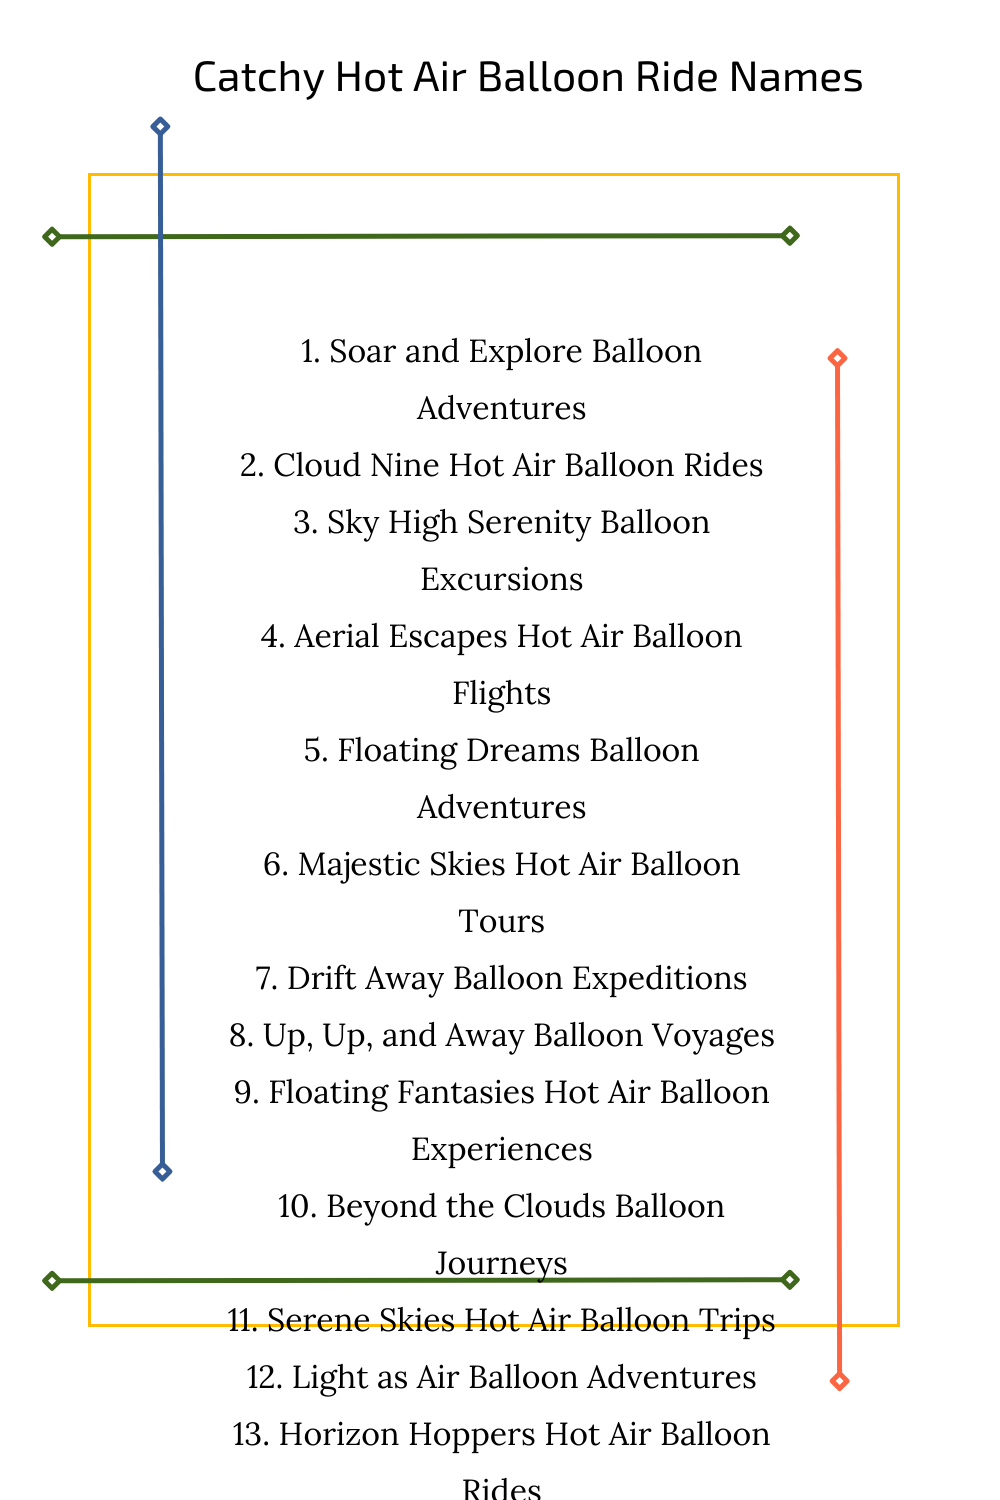 Catchy Hot Air Balloon Ride Names